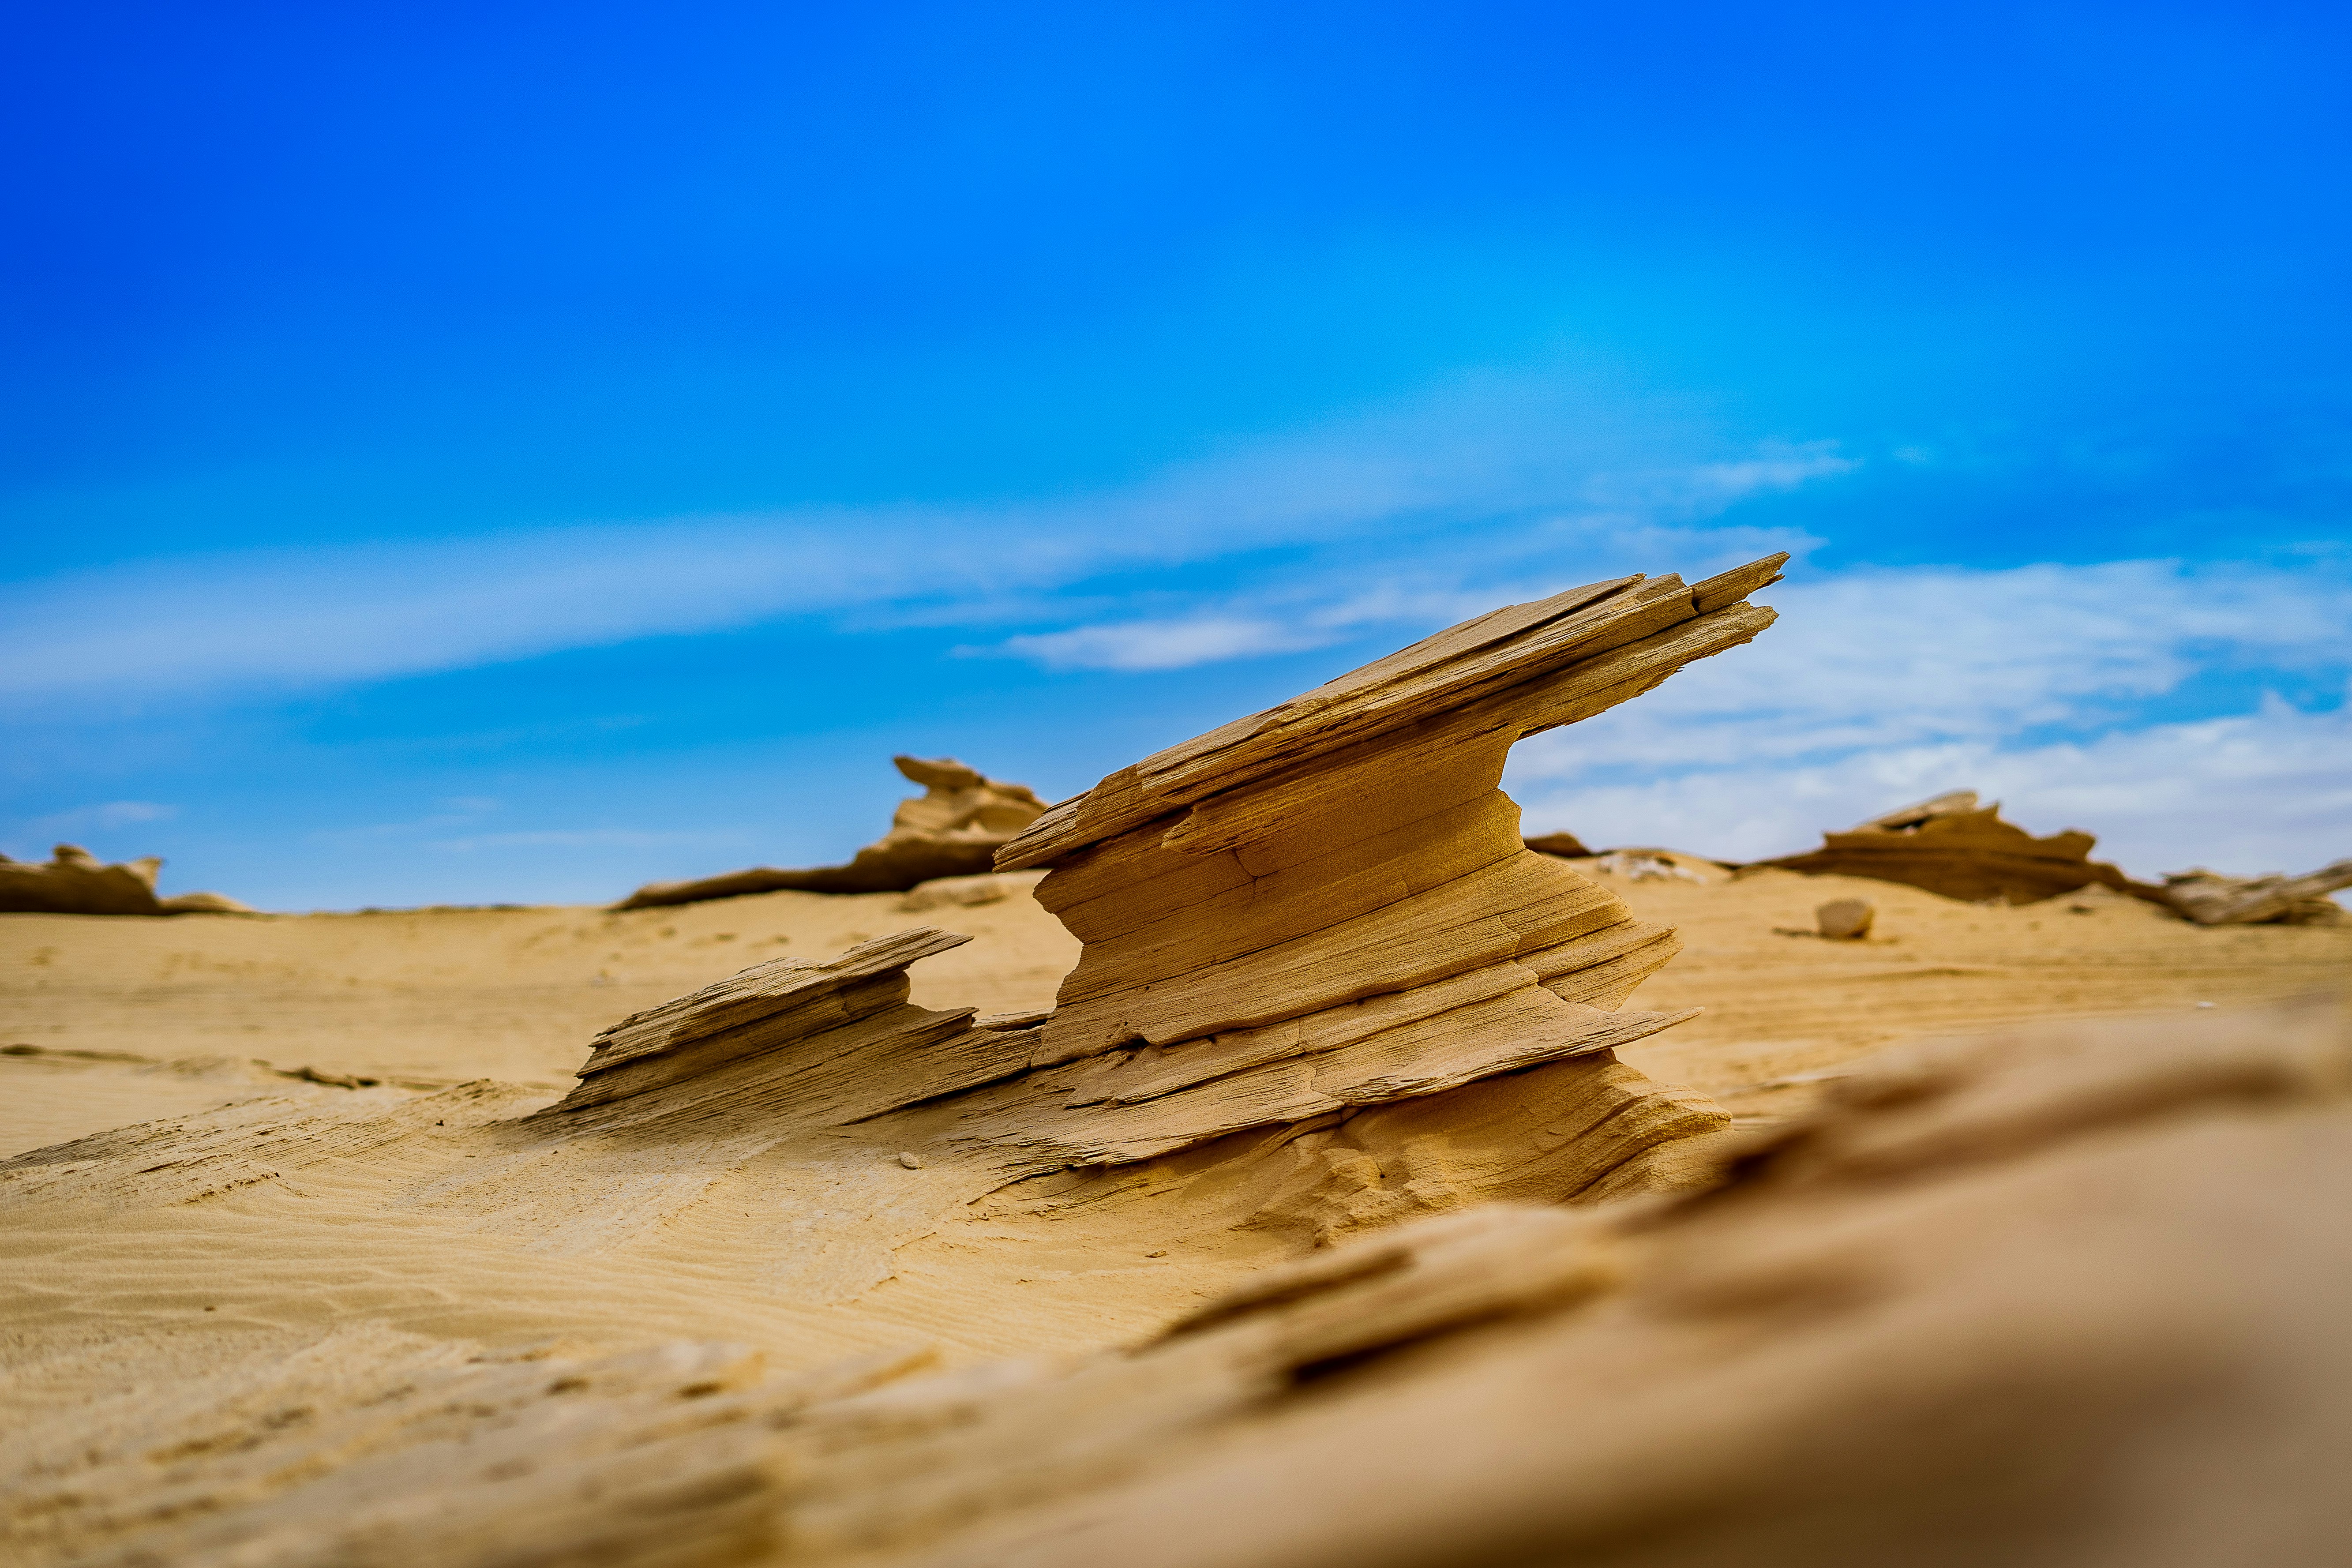 brown wood log on brown sand under blue sky during daytime